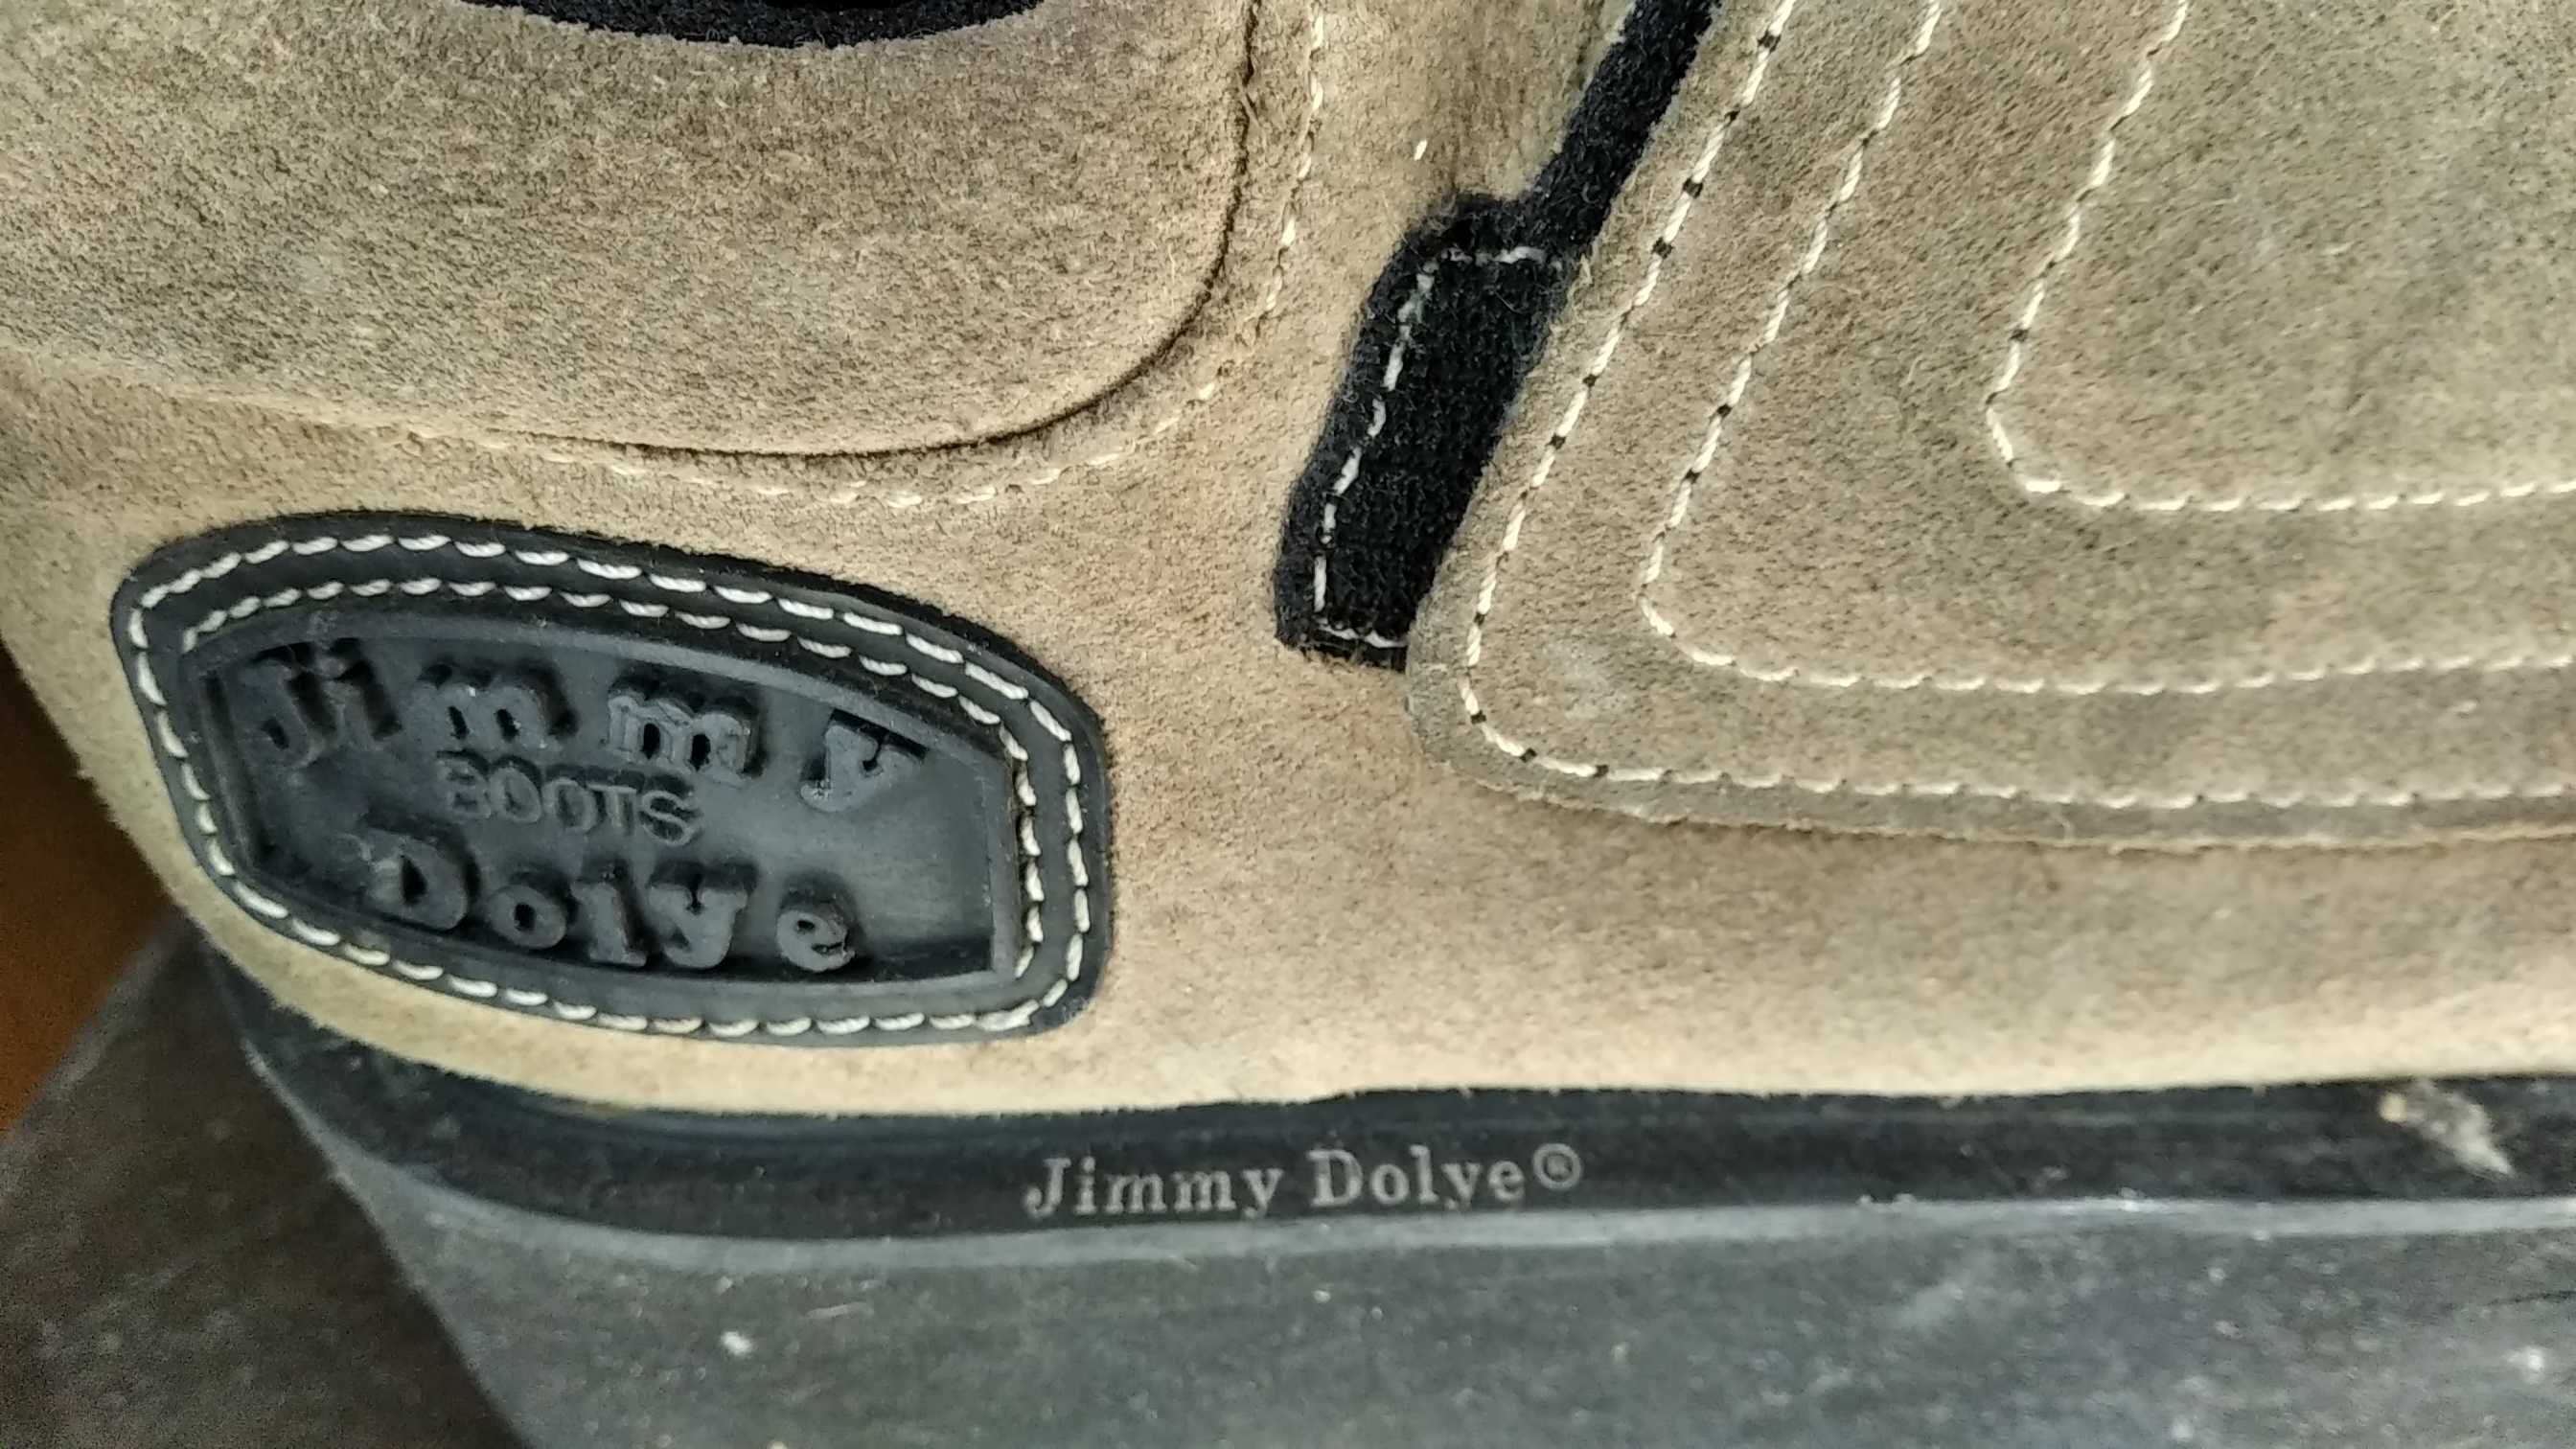 Sapatos Jimmy Dolye Boots